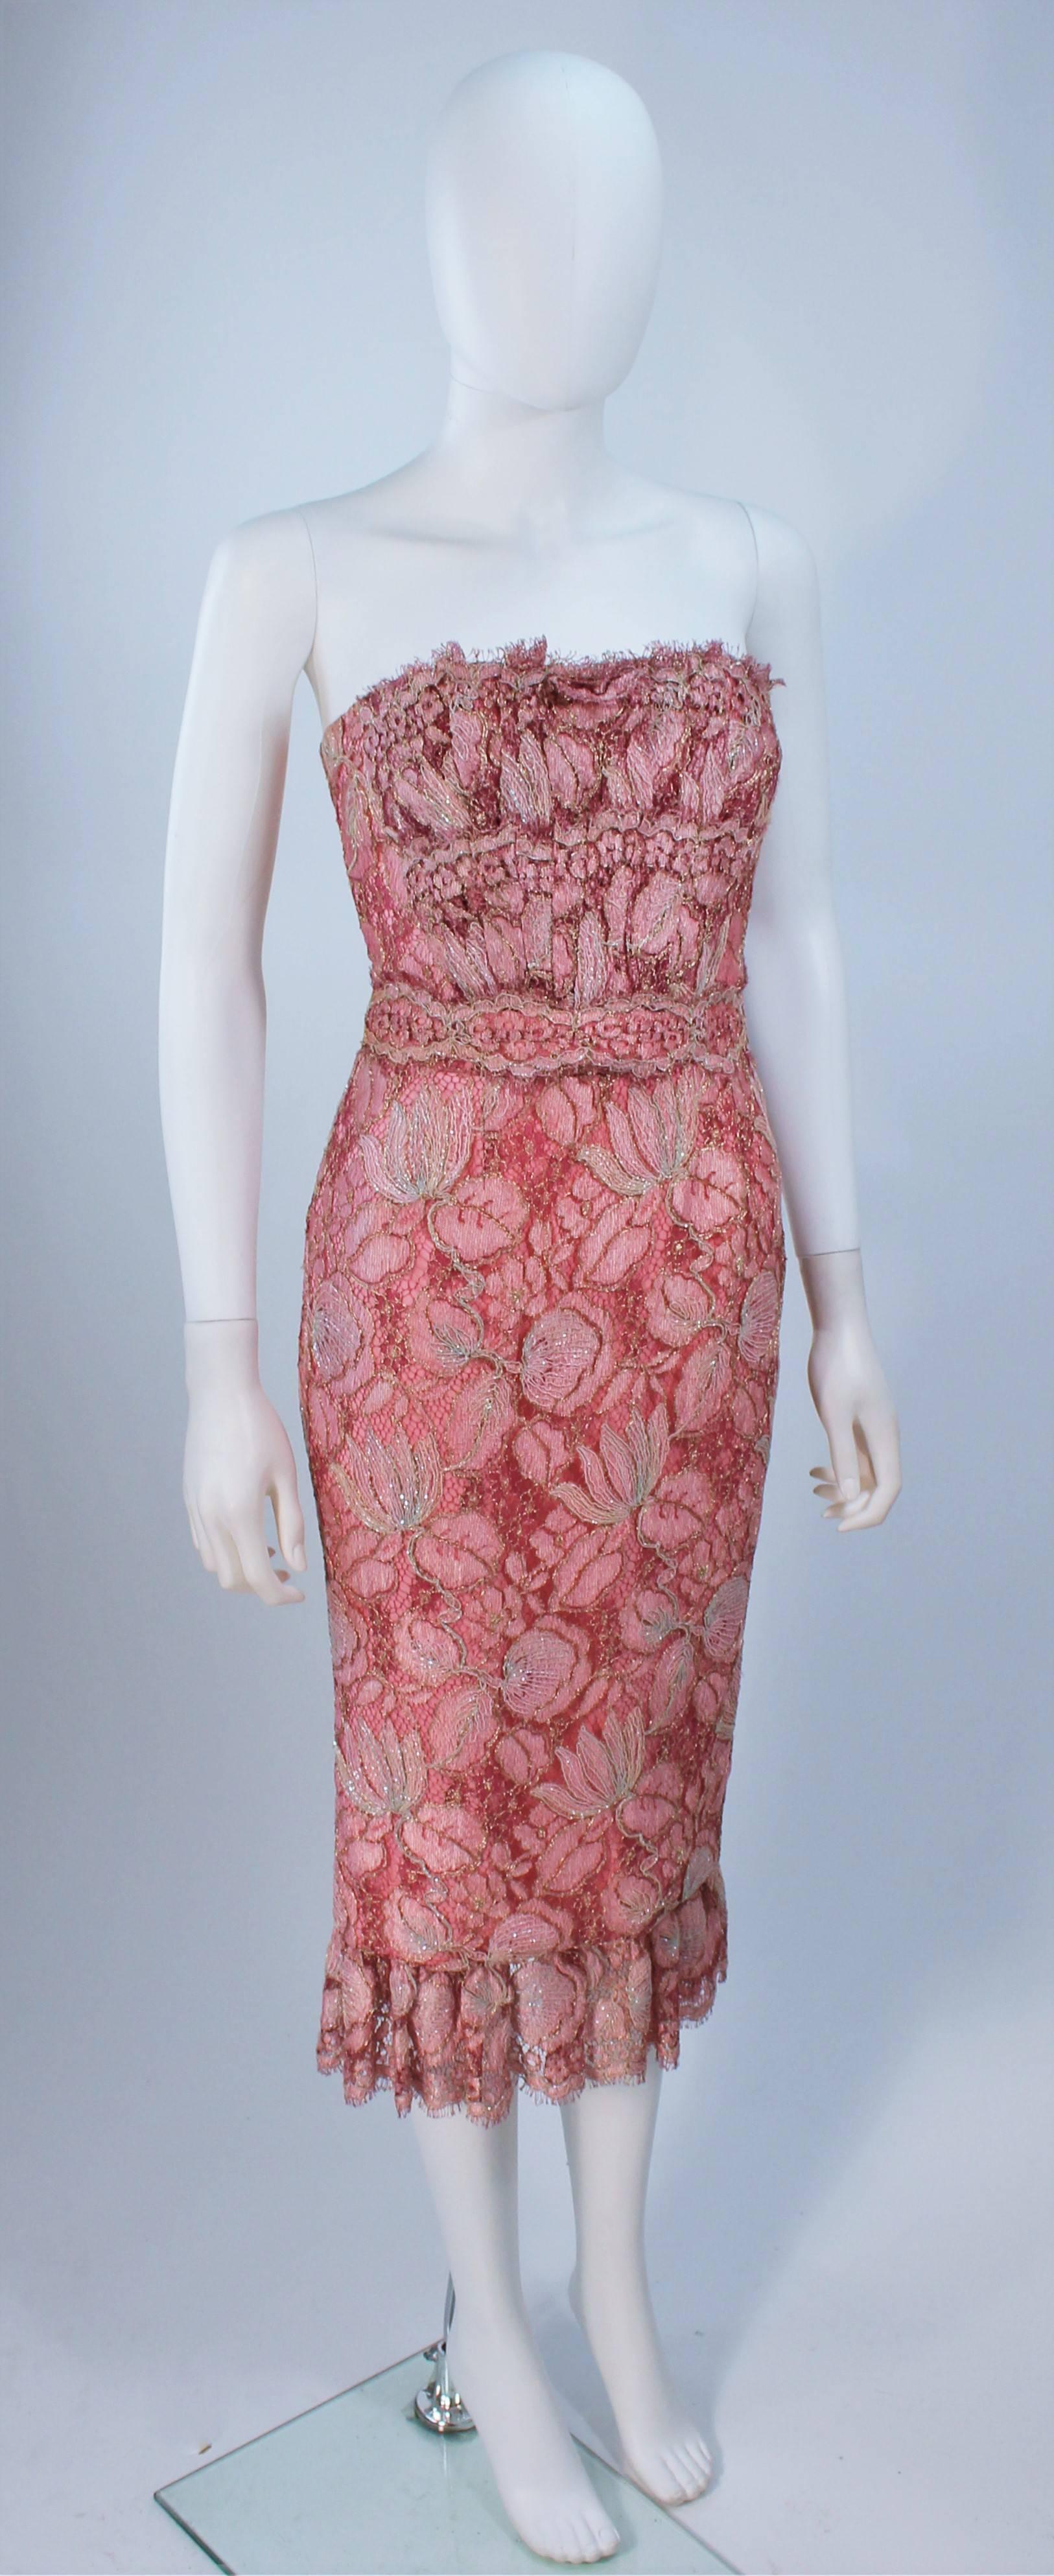 ELIZABETH MASON COUTURE Pink Metallic Lace Cocktail Dress Size 2 Made ...